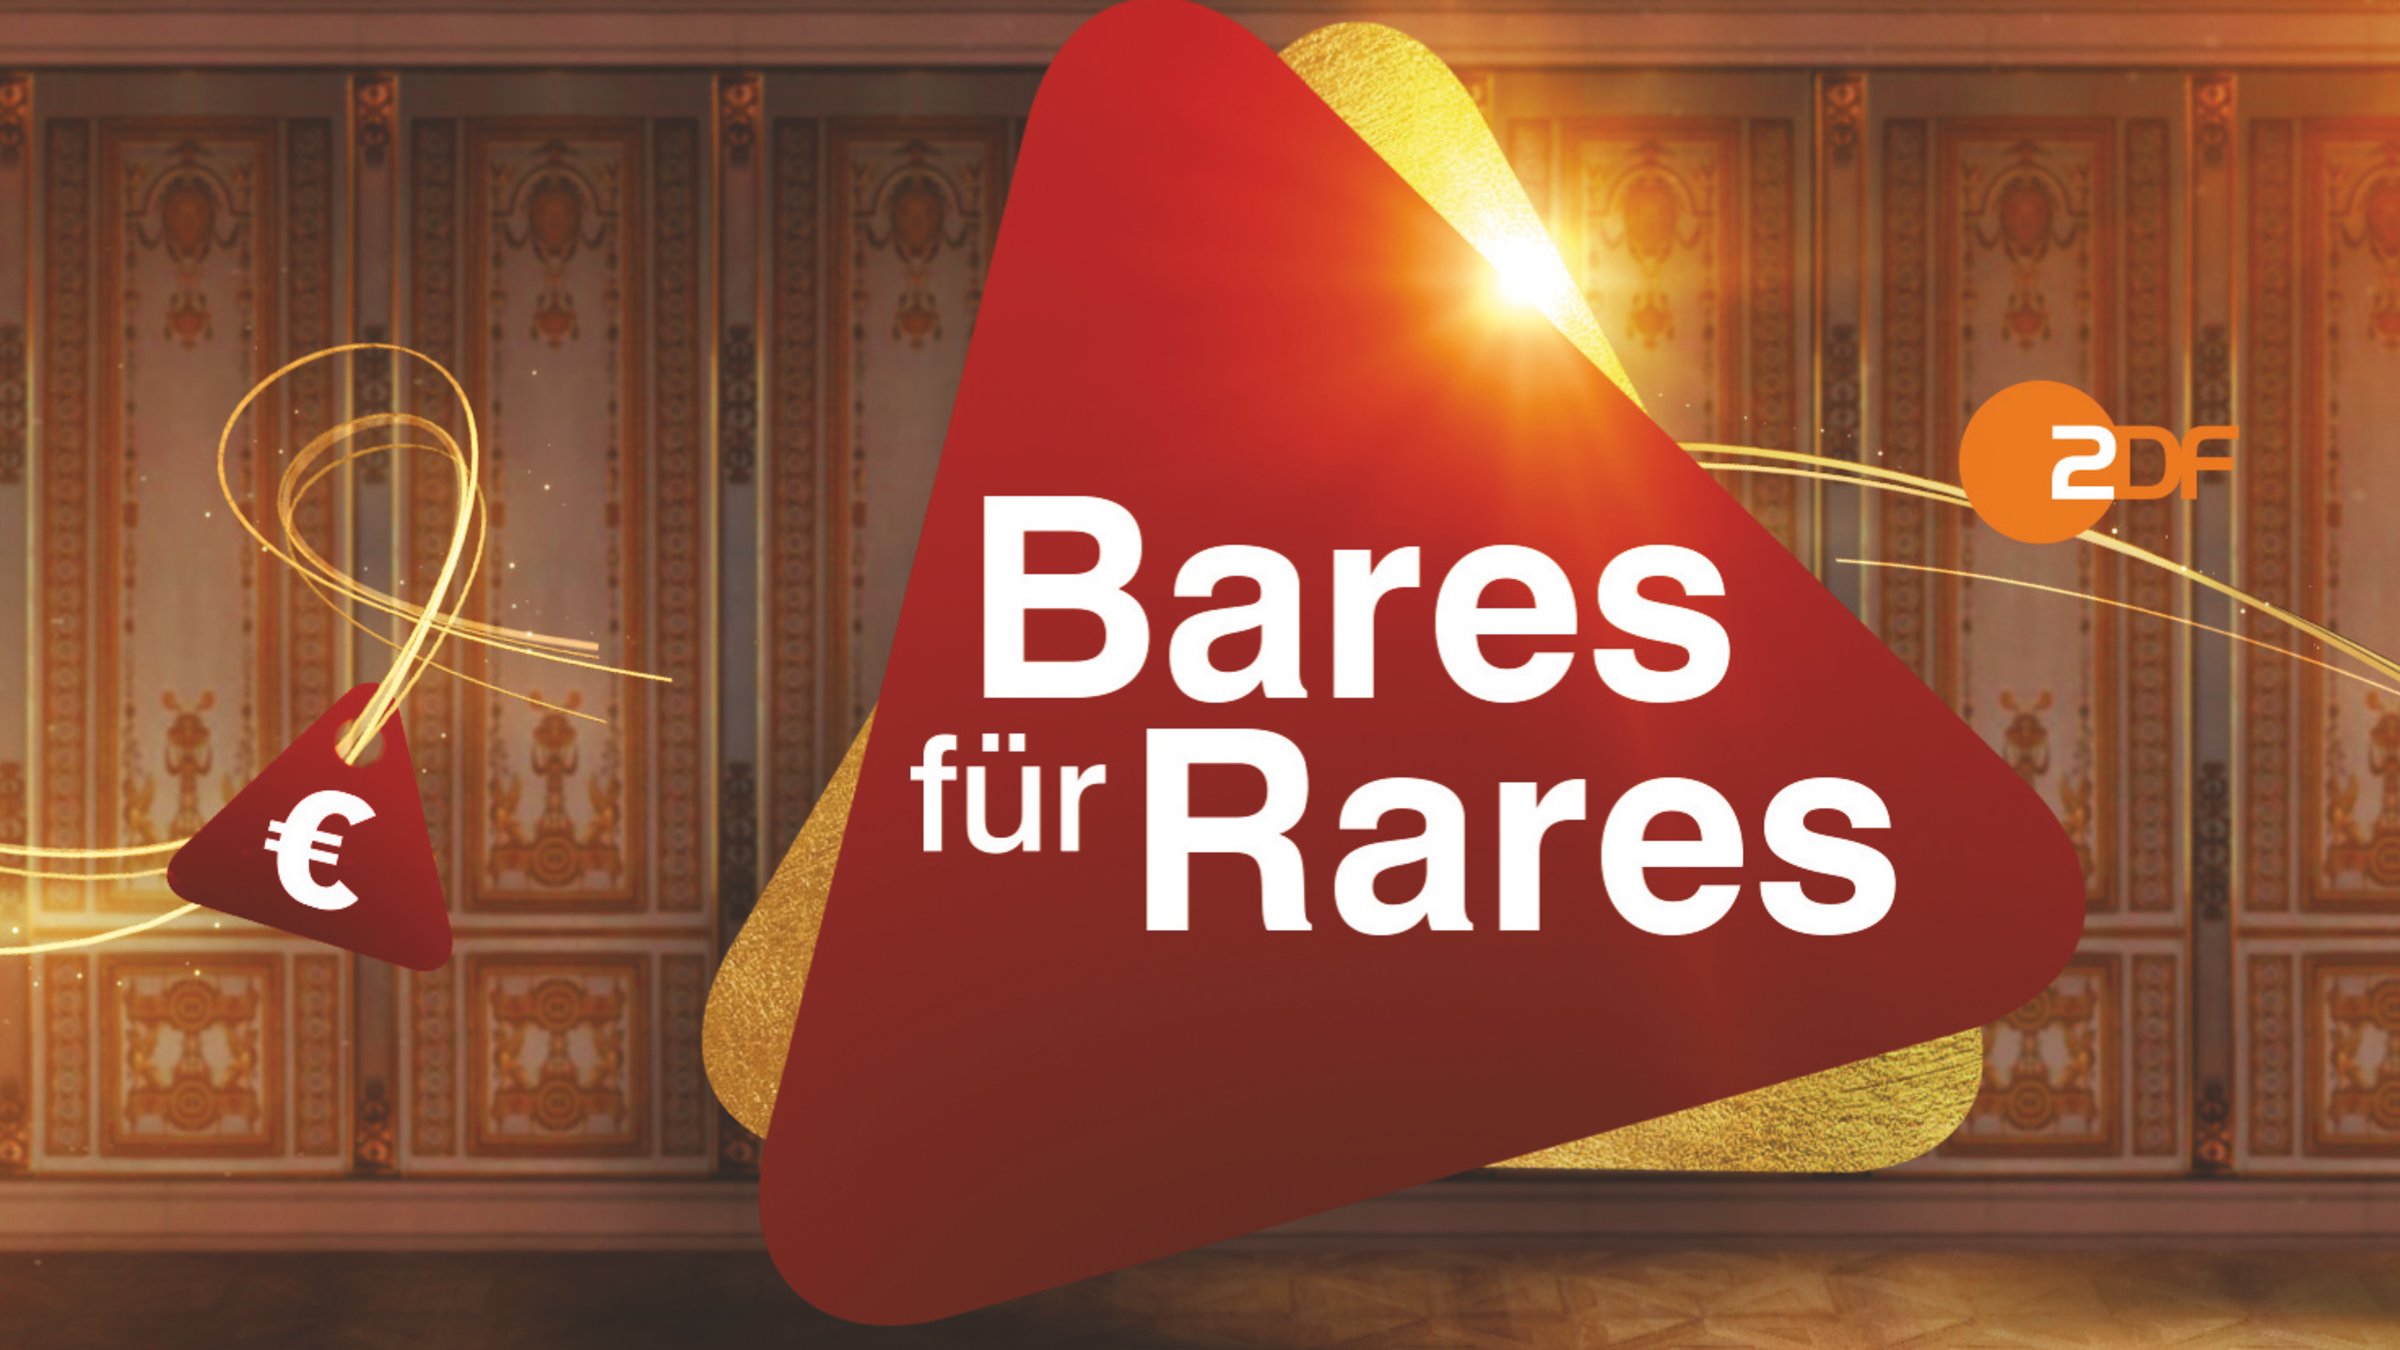 Bares Fur Rares Im Schloss Vom 19 August 2020 Zdfmediathek